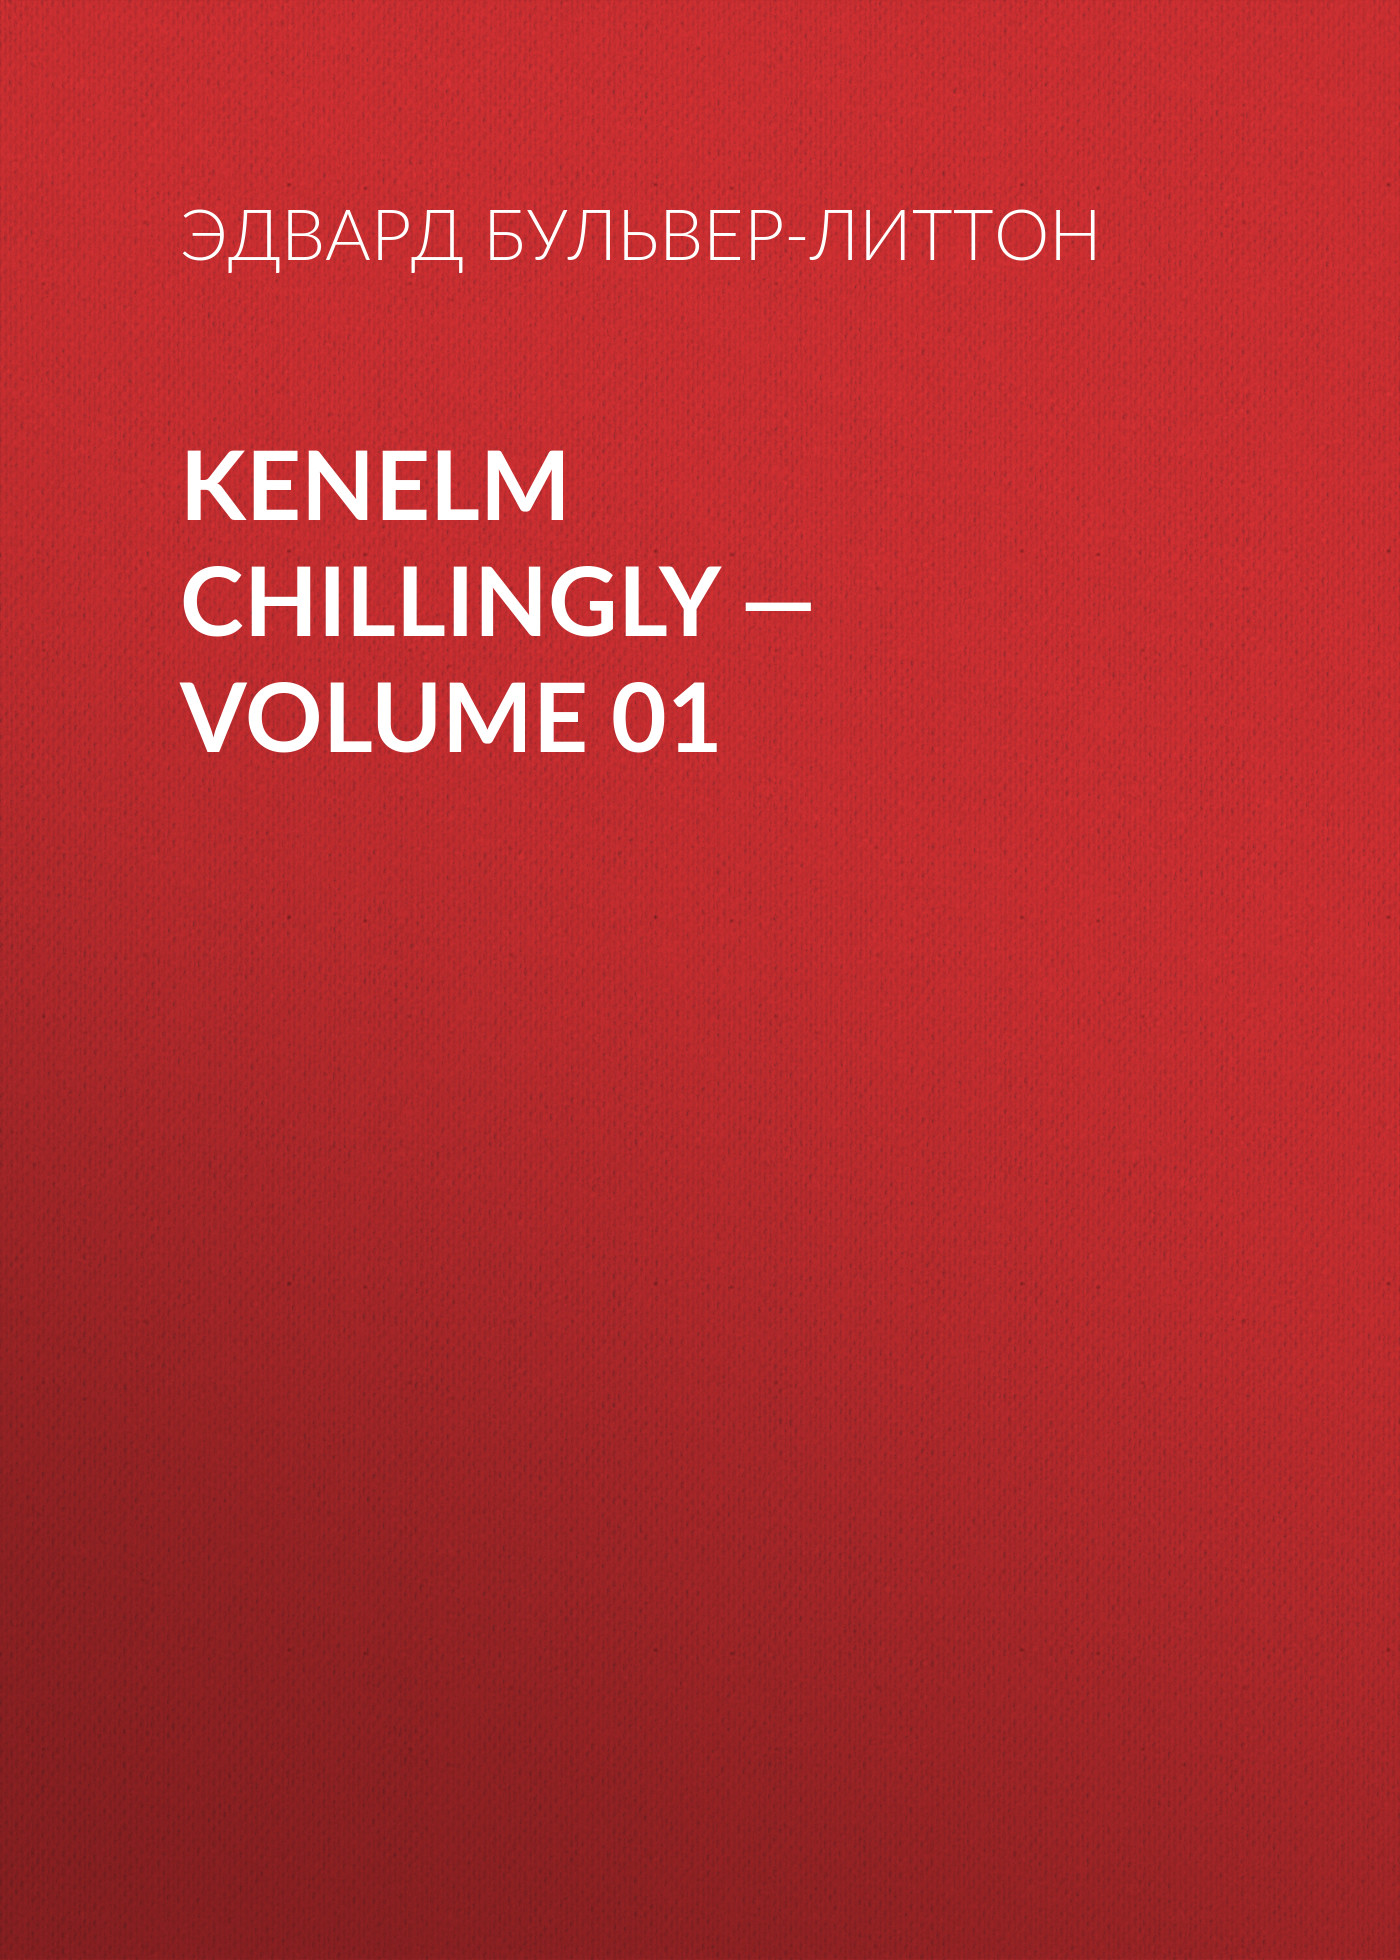 Kenelm Chillingly— Volume 01